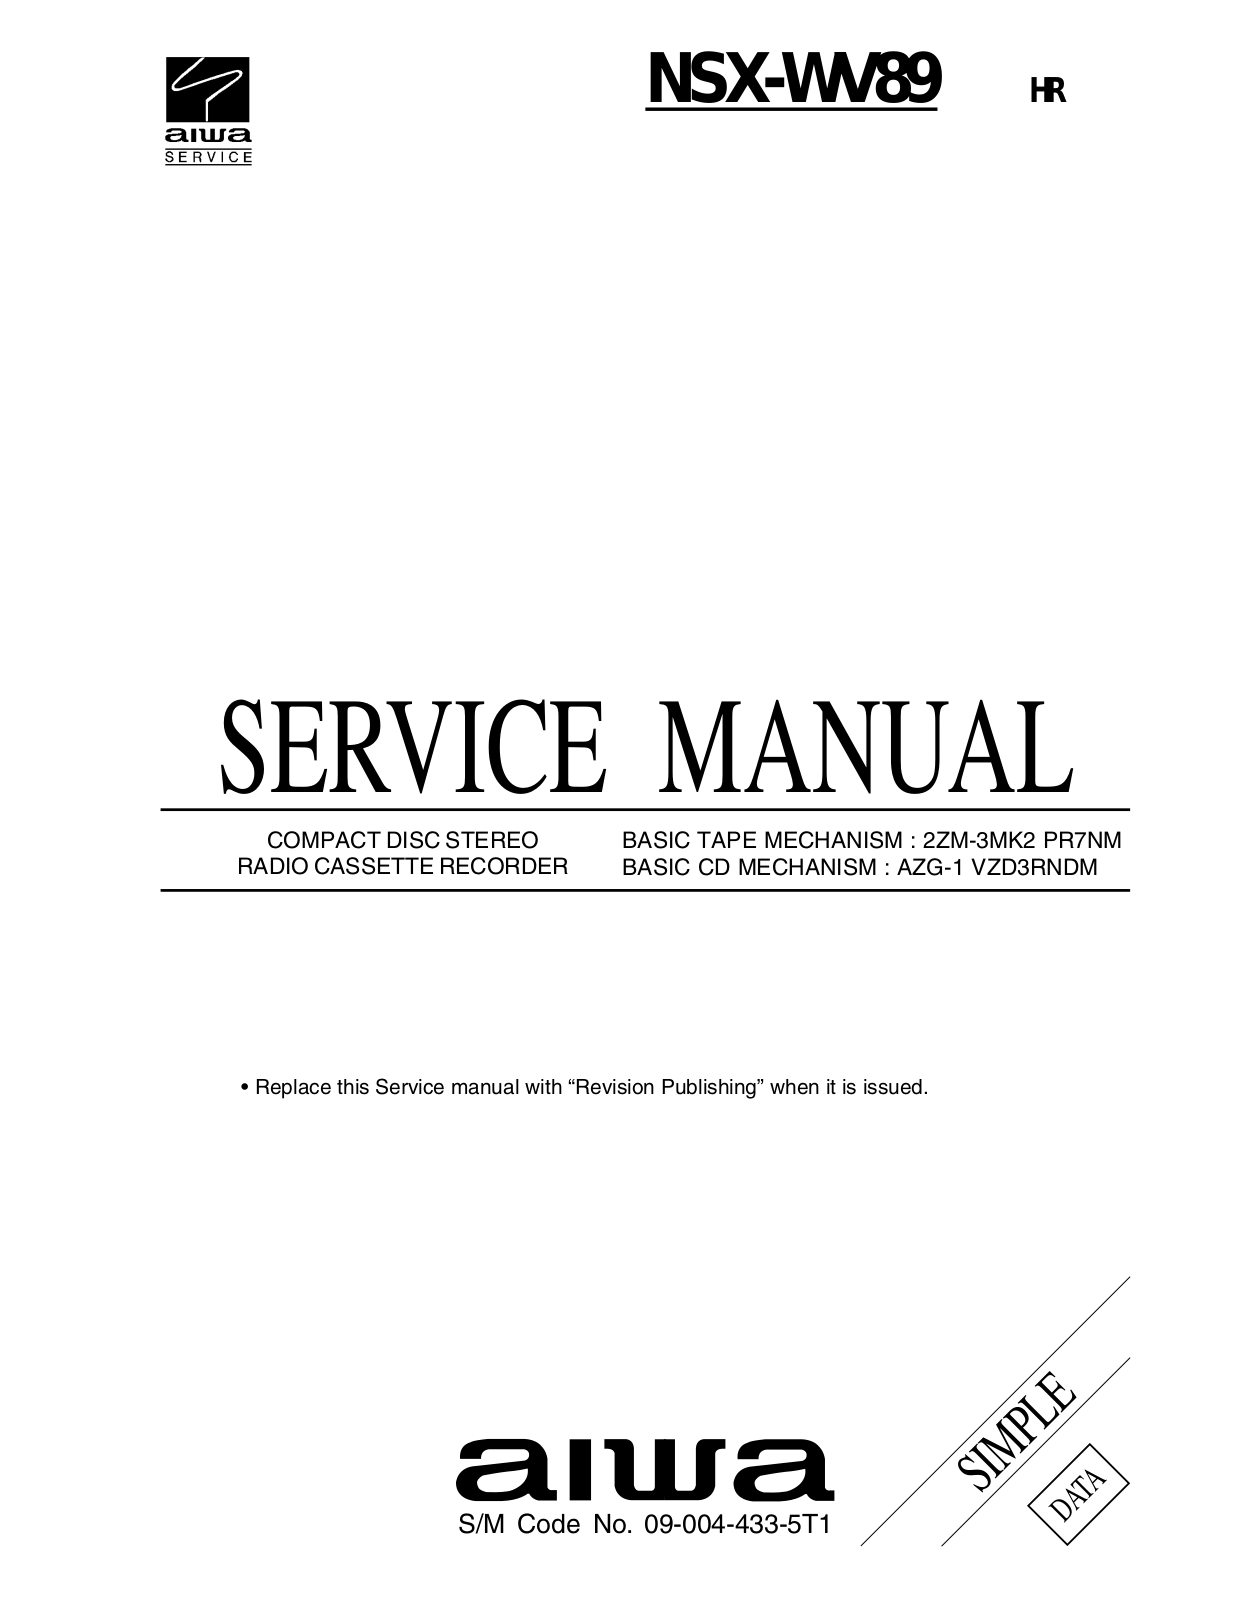 Aiwa NSX-WV89 Service Manual